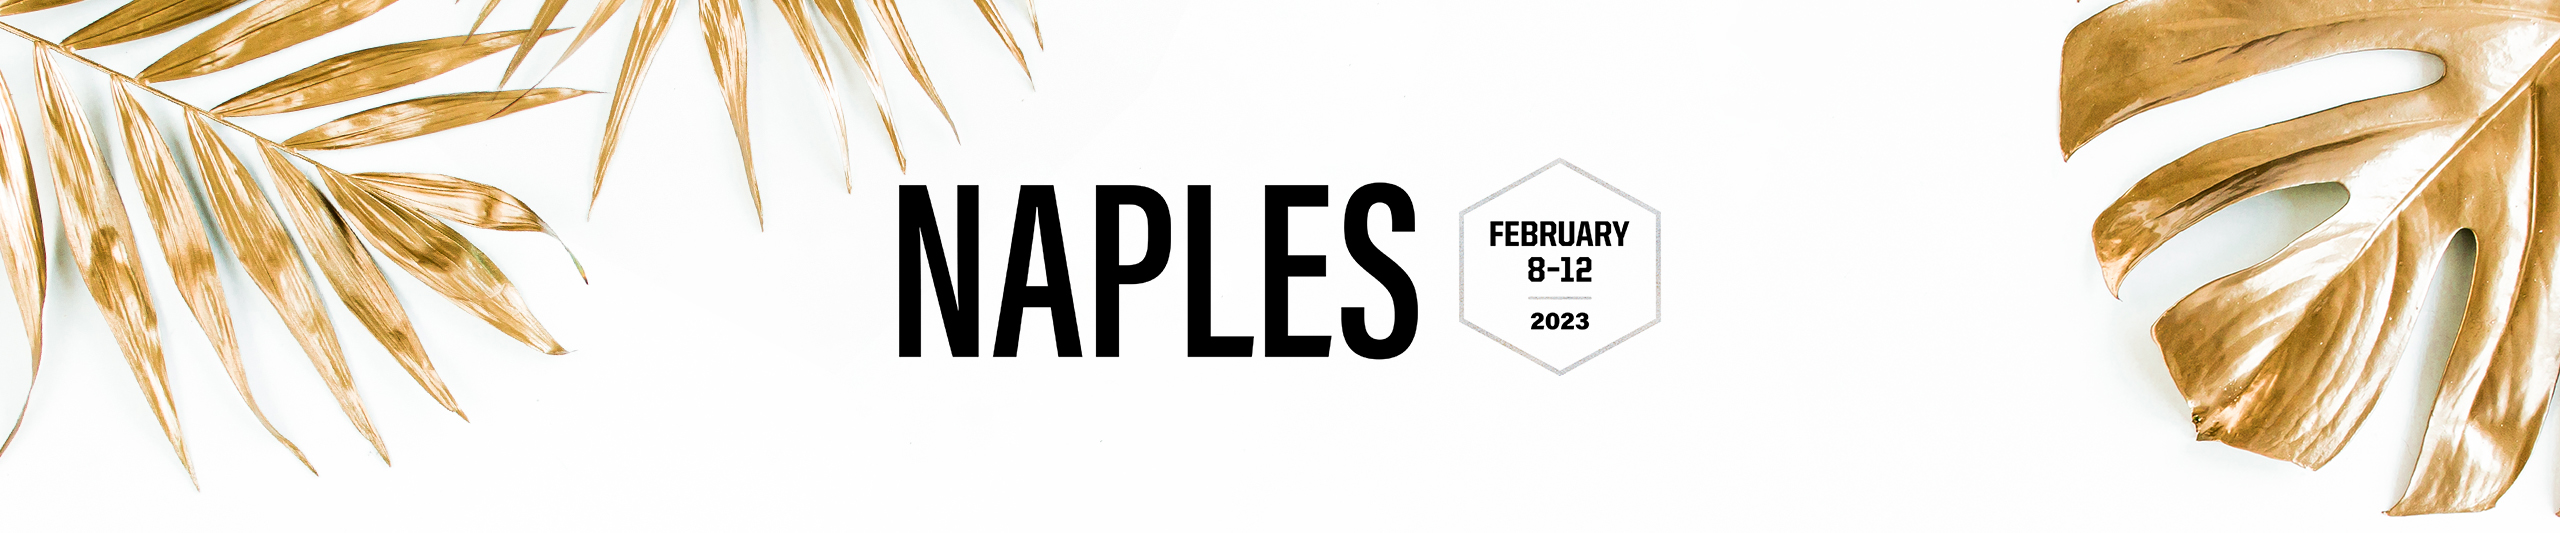 Naples February 8-12, 2023